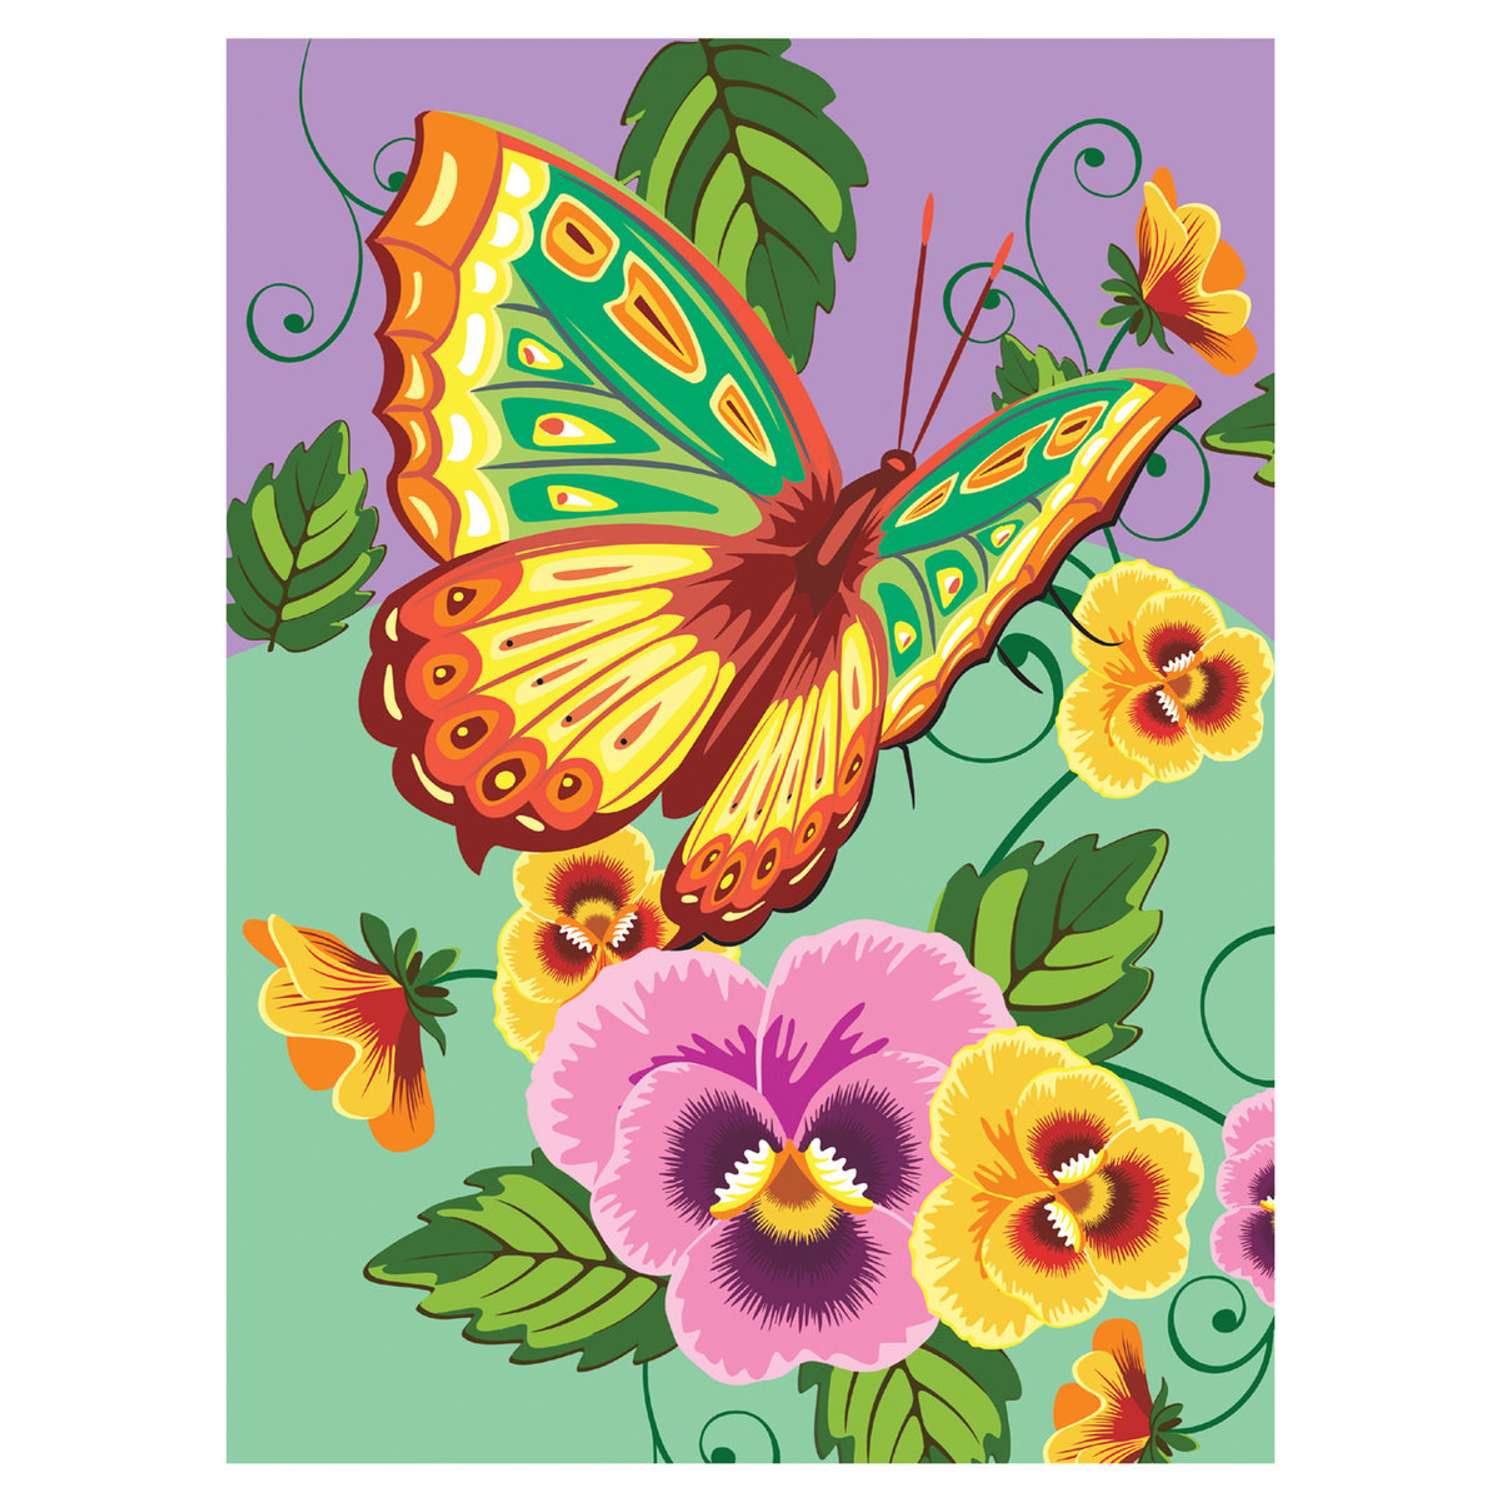 Раскраска по номерам Юнландия Бабочка А4 с акриловыми красками на картоне кисть - фото 2